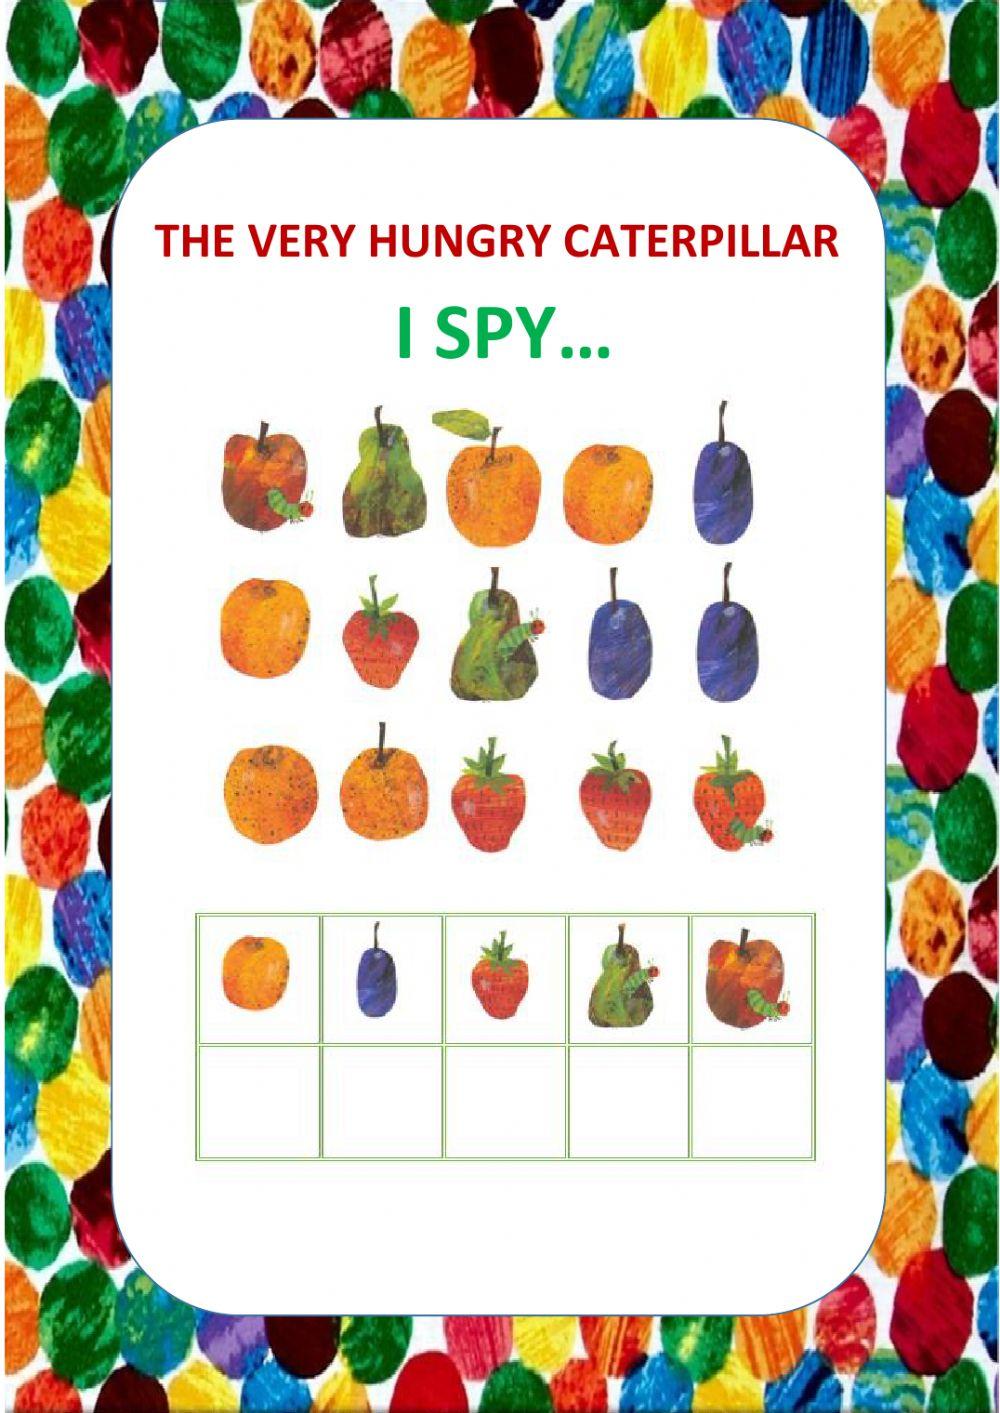 The Very Hungry Caterpillar - I spy